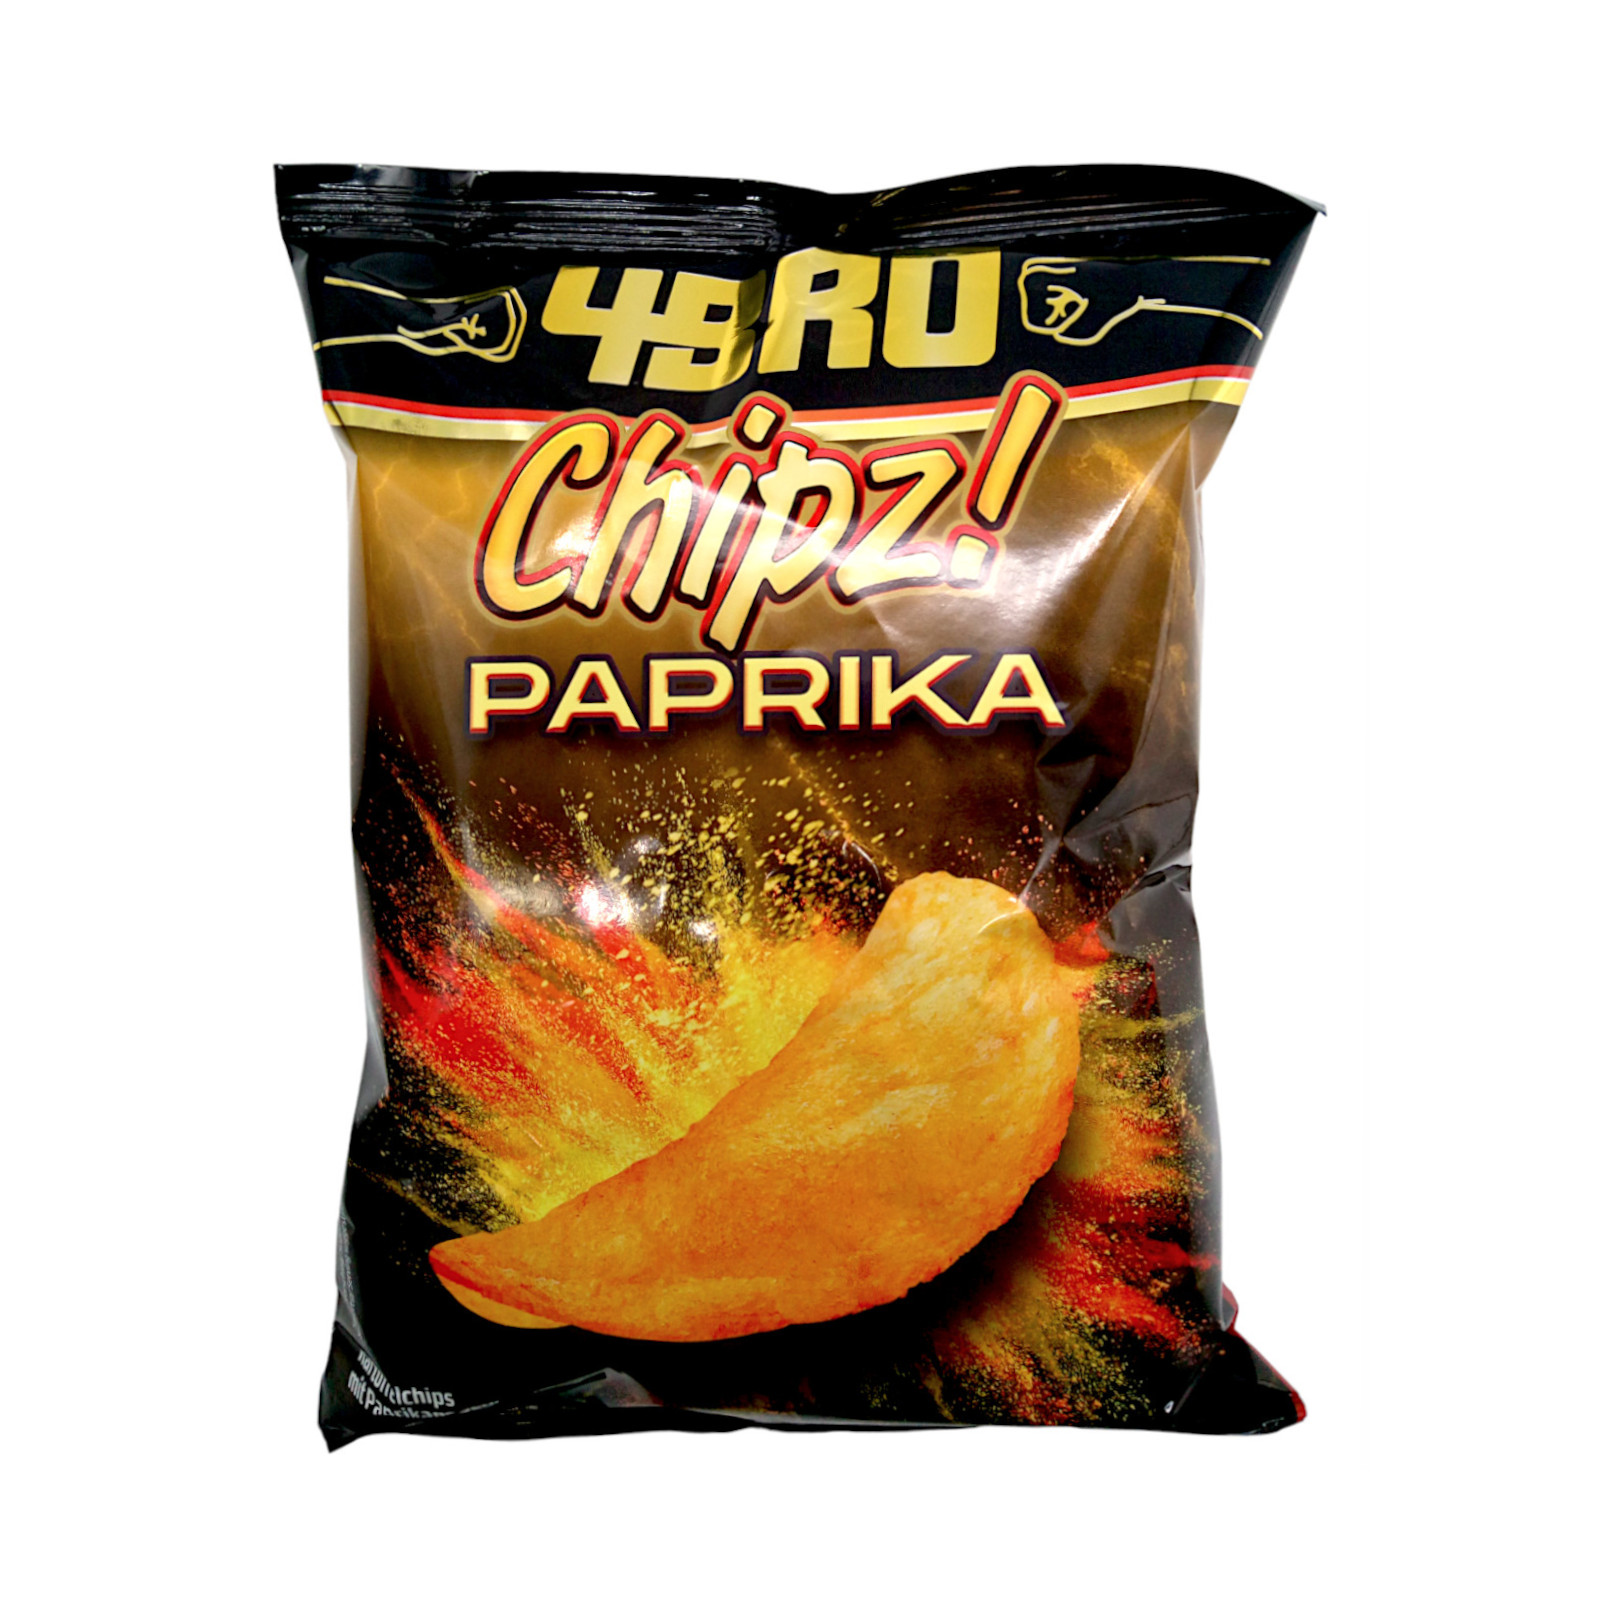 4Bro Chipz! Paprika 125g